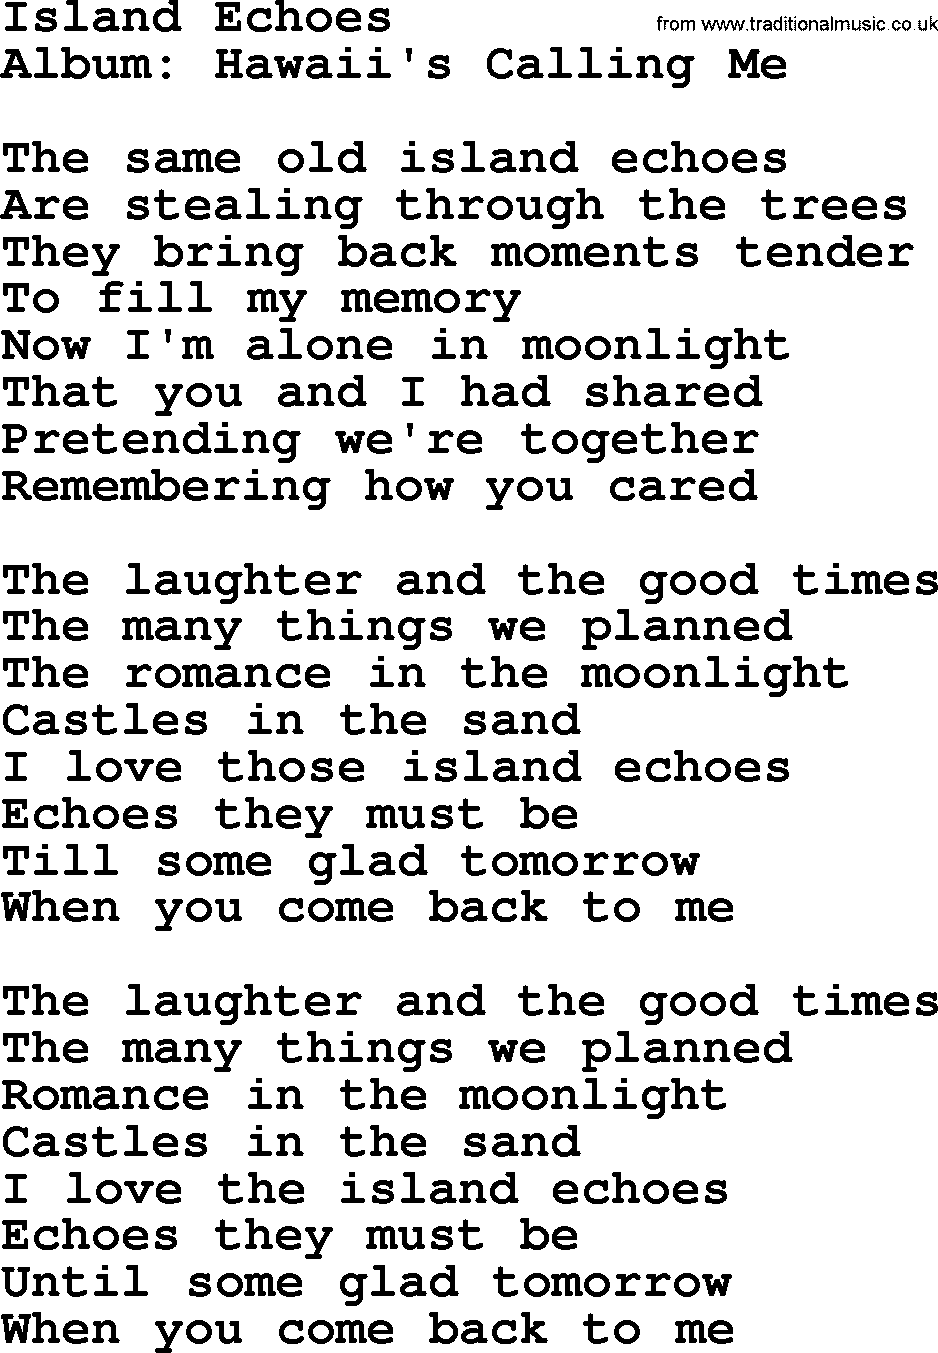 Marty Robbins song: Island Echoes, lyrics